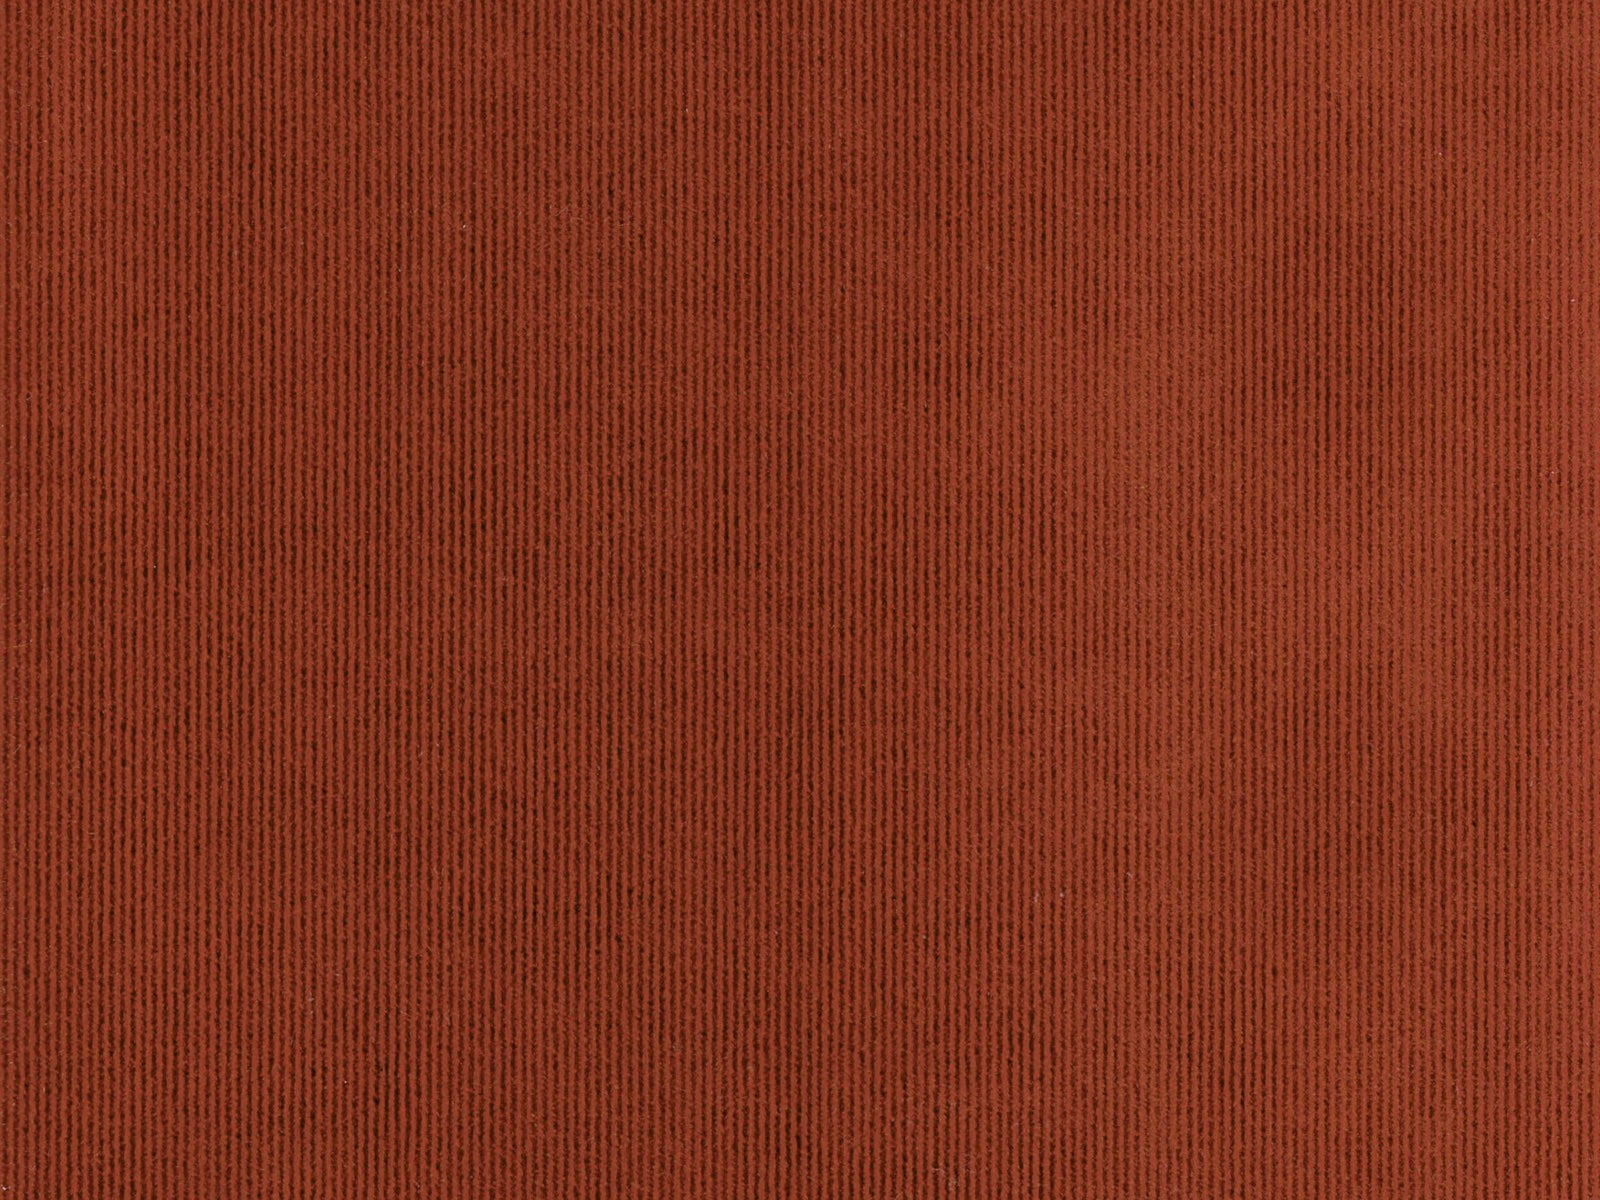 Dolce Fabric Samples - Rydan Interiors